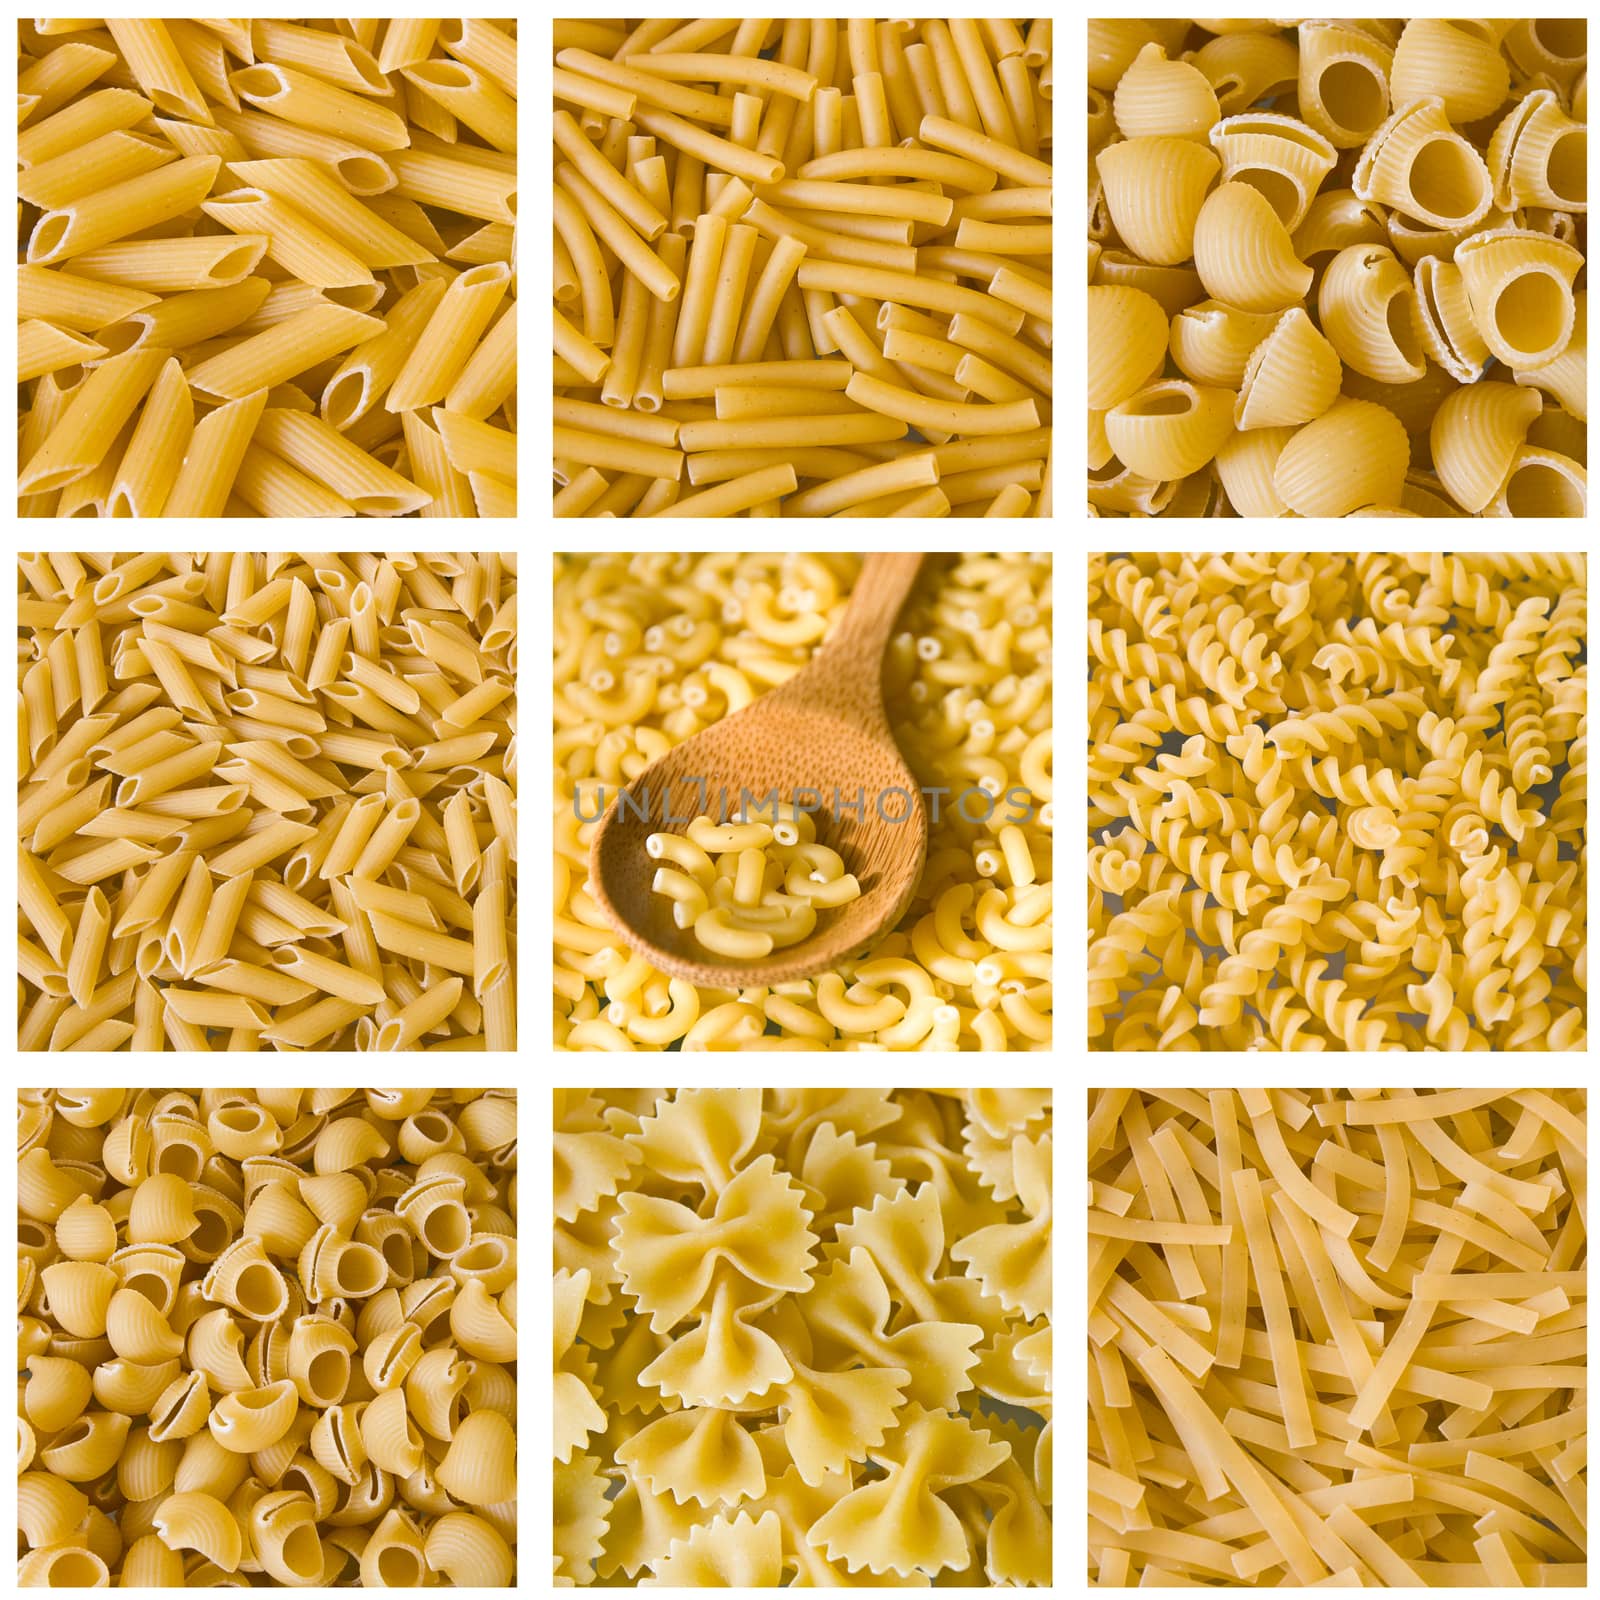 pasta collage by NeydtStock